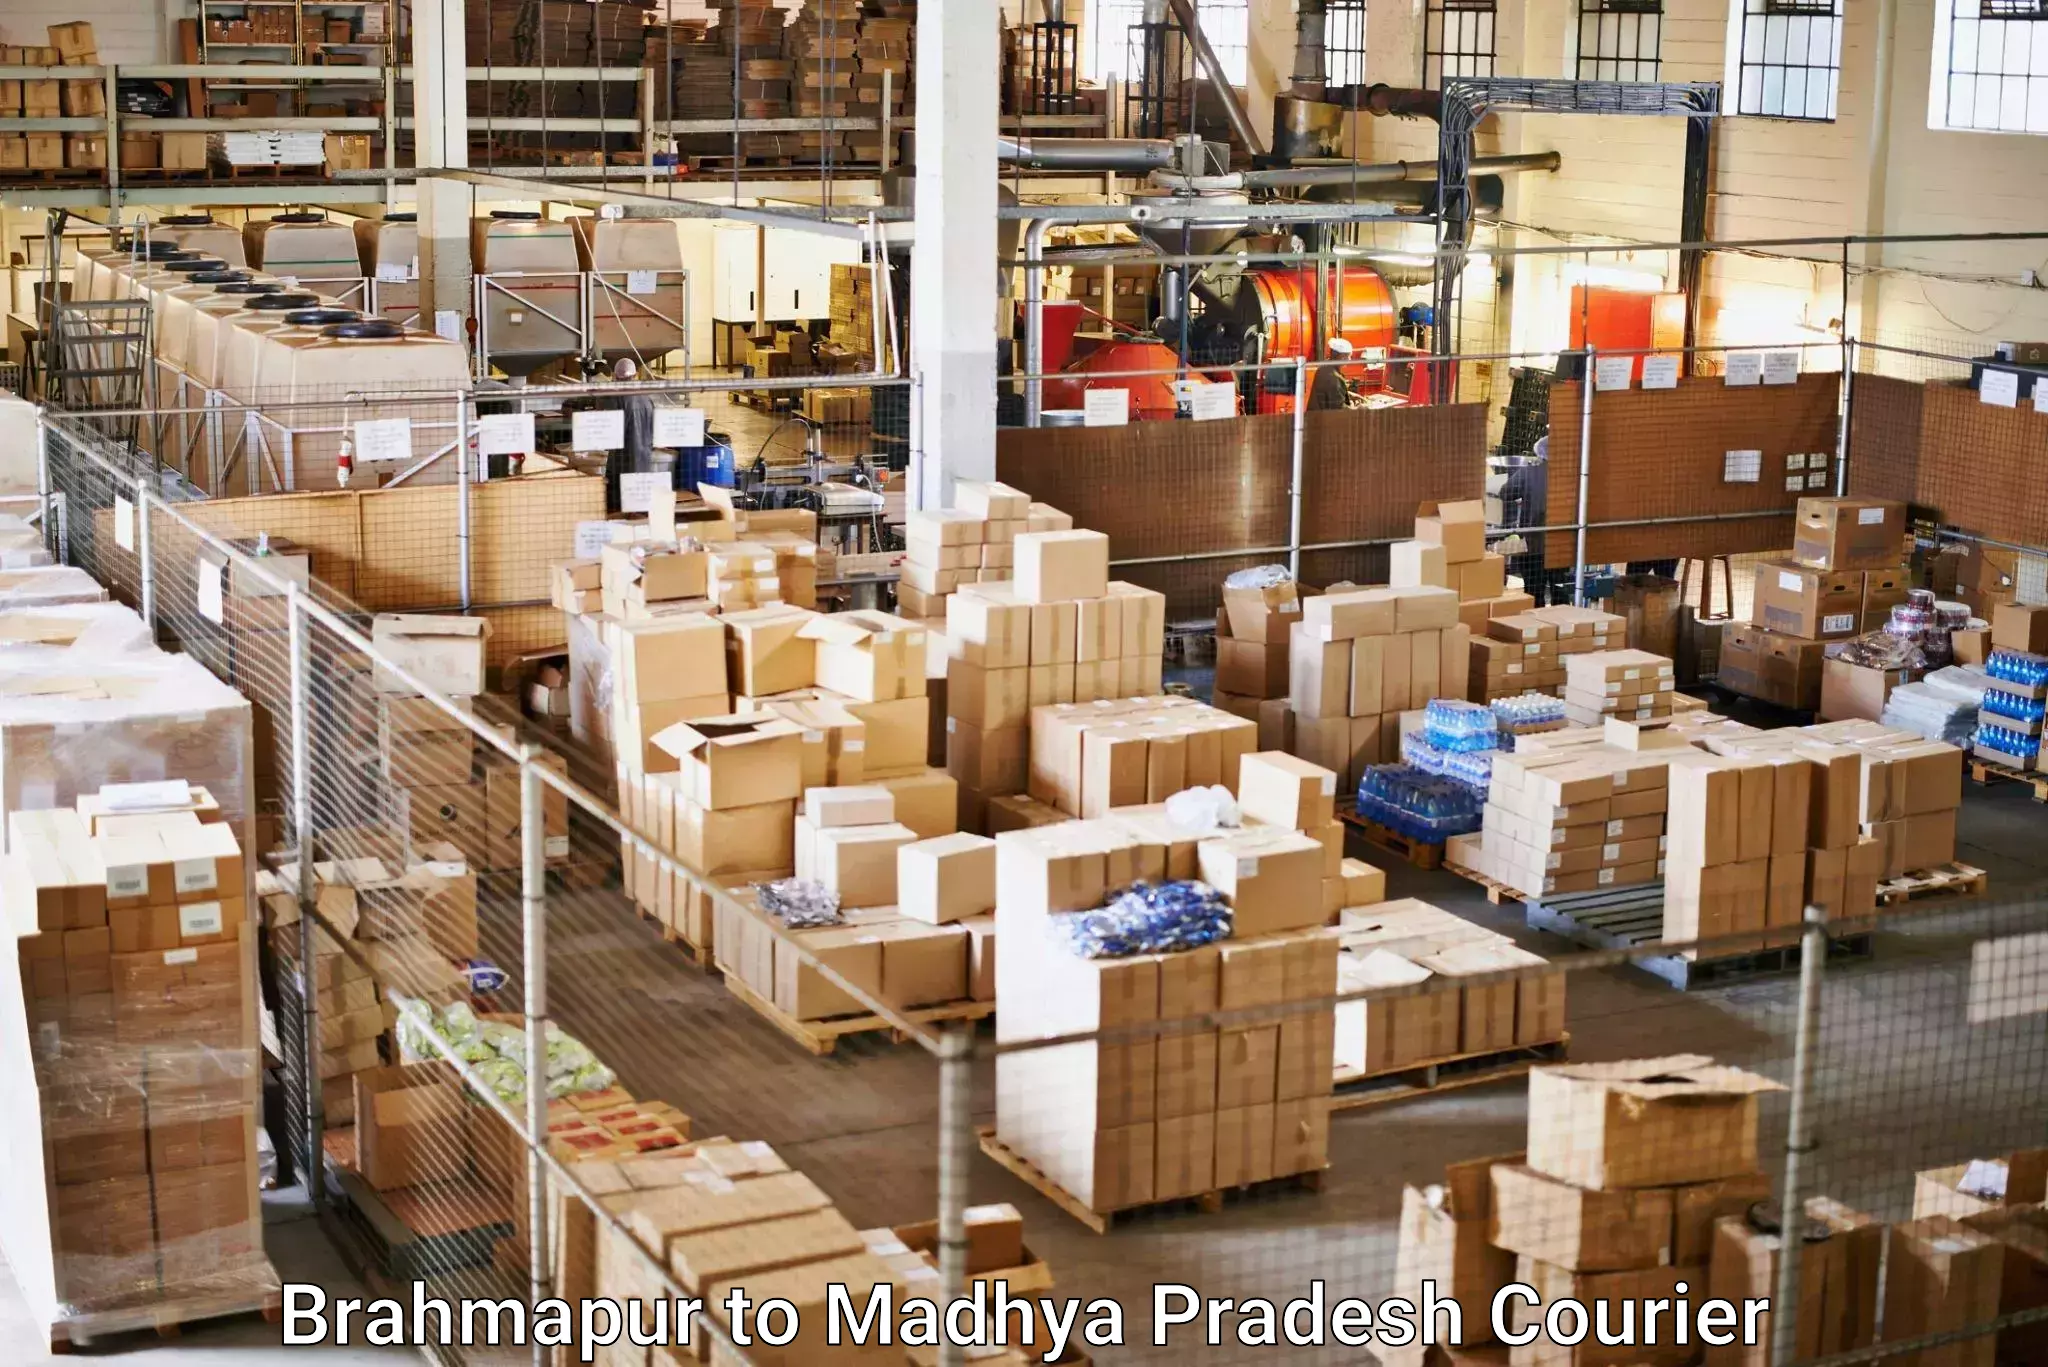 Tech-enabled shipping Brahmapur to Burhanpur